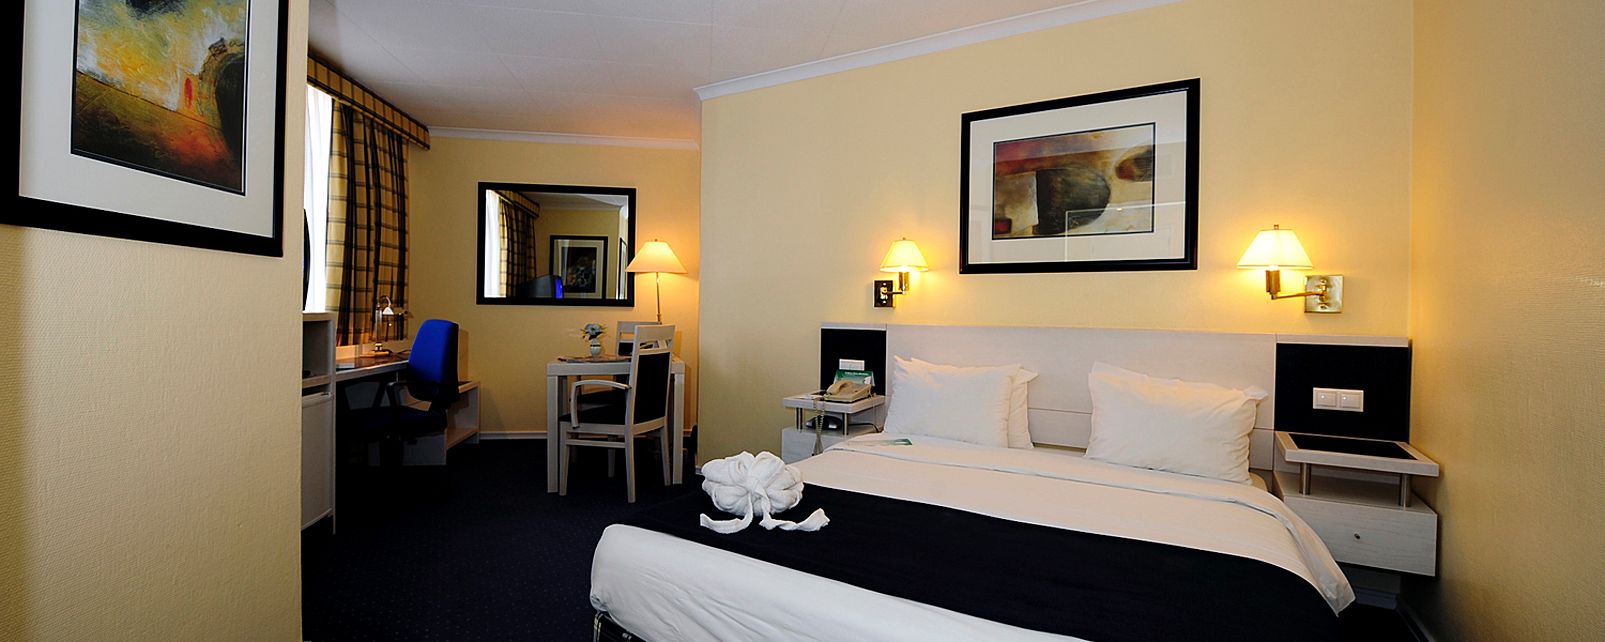 Hotel Holiday Inn Lisboa